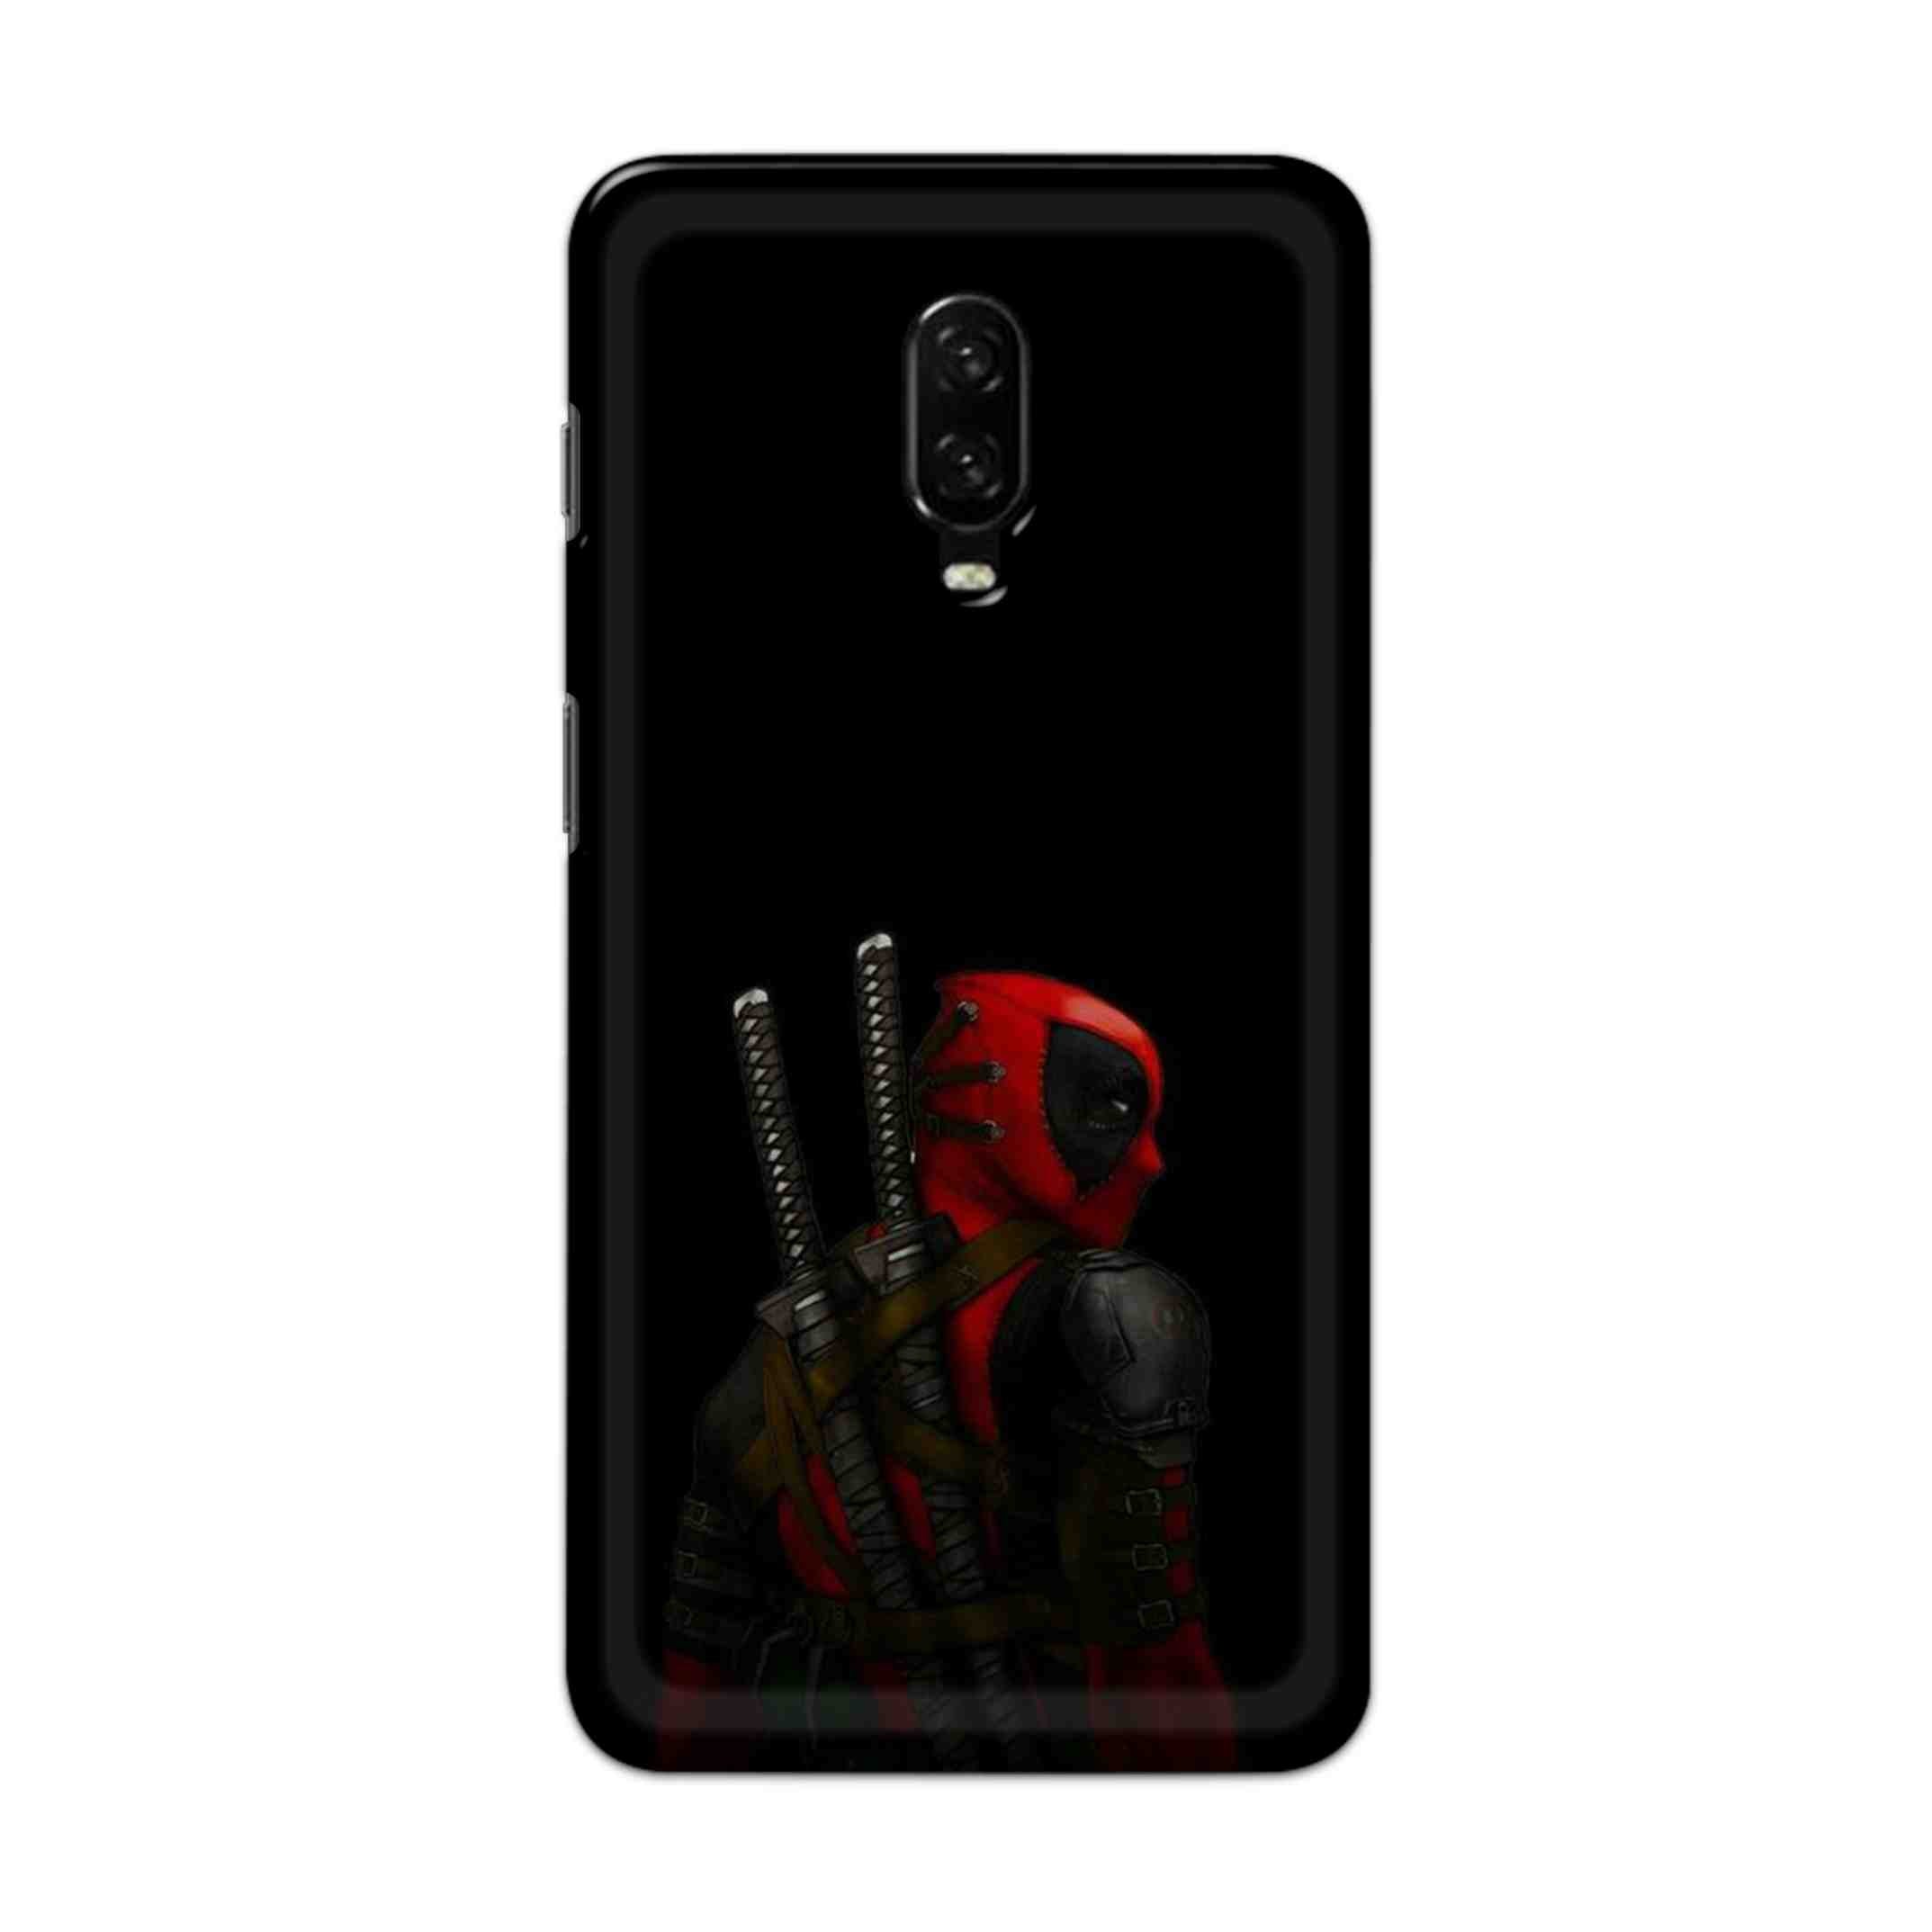 Buy Deadpool Hard Back Mobile Phone Case Cover For OnePlus 6T Online